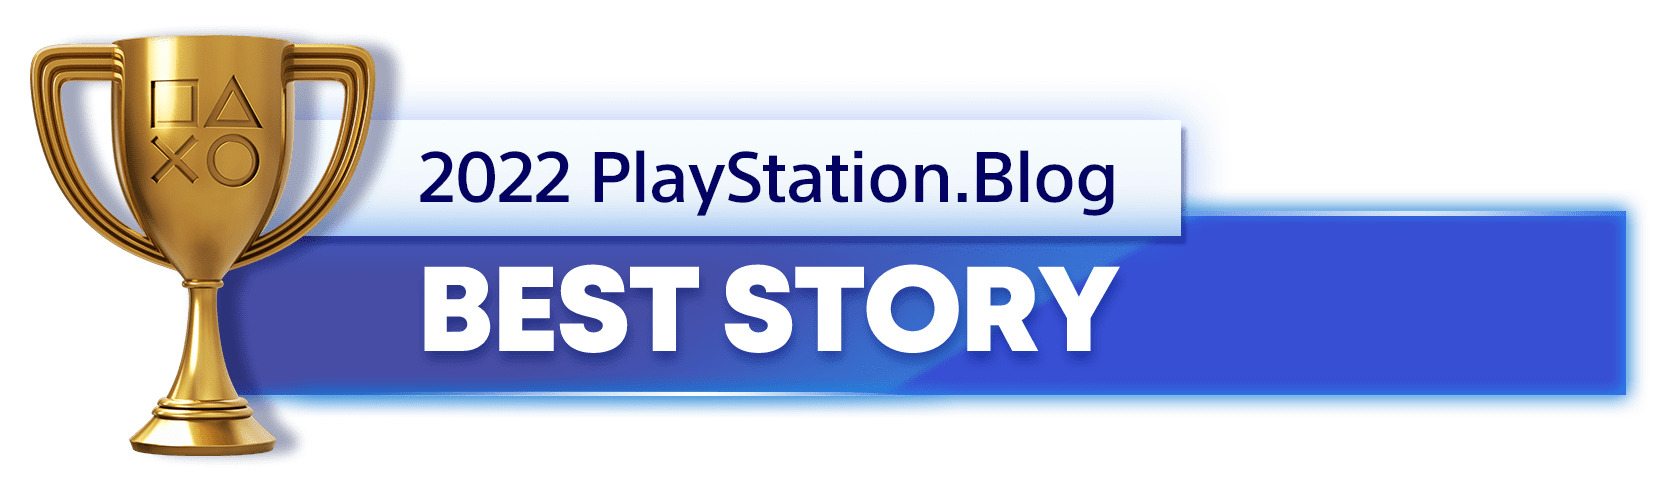 PlayStation Blog's 2022 Gold trophy for best story